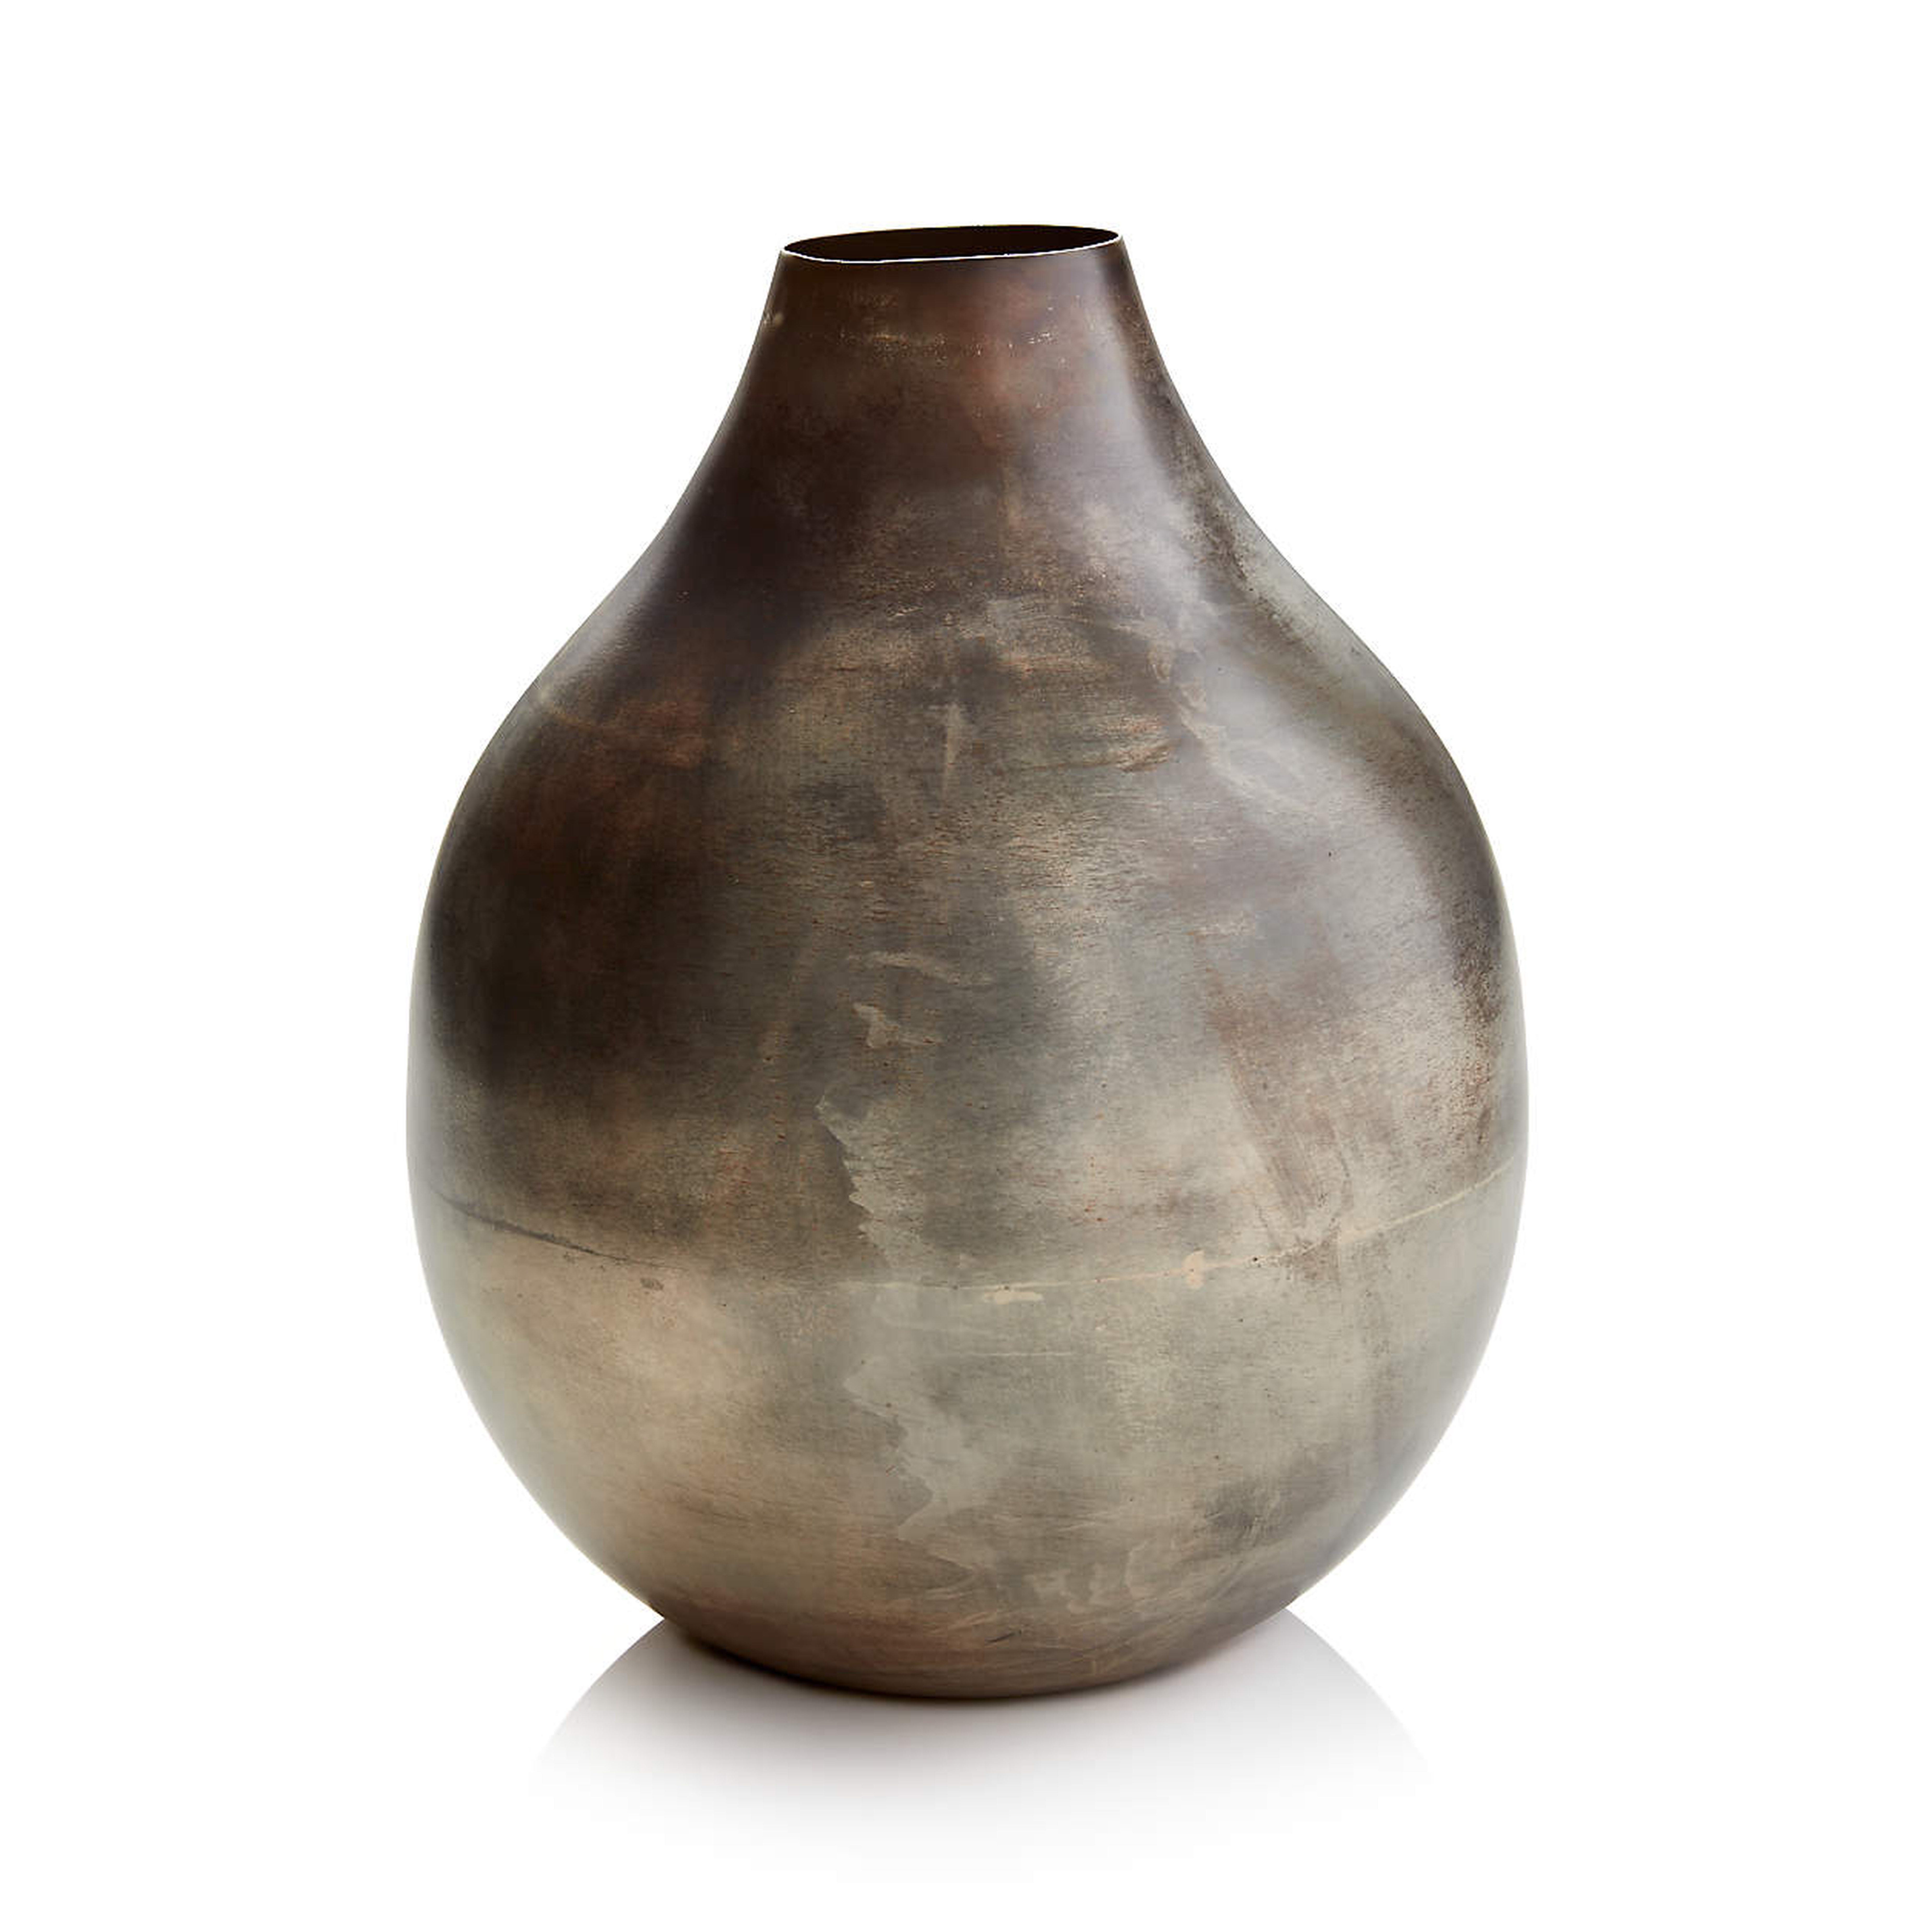 Bringham Metal Vase, Large - Crate and Barrel